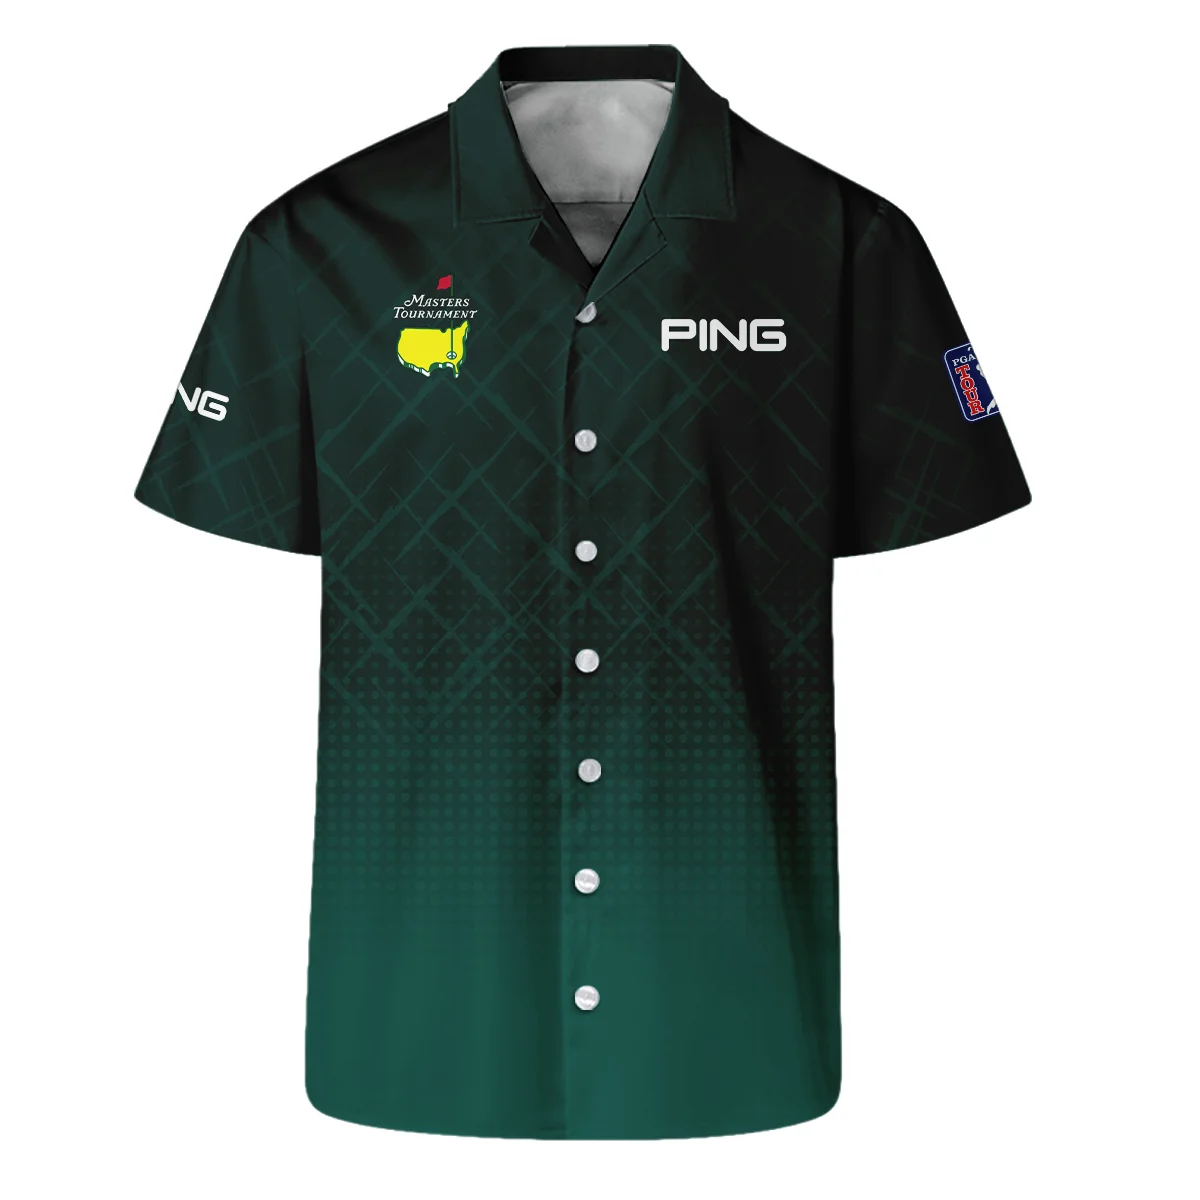 Ping Masters Tournament Sport Jersey Pattern Dark Green Unisex T-Shirt Style Classic T-Shirt